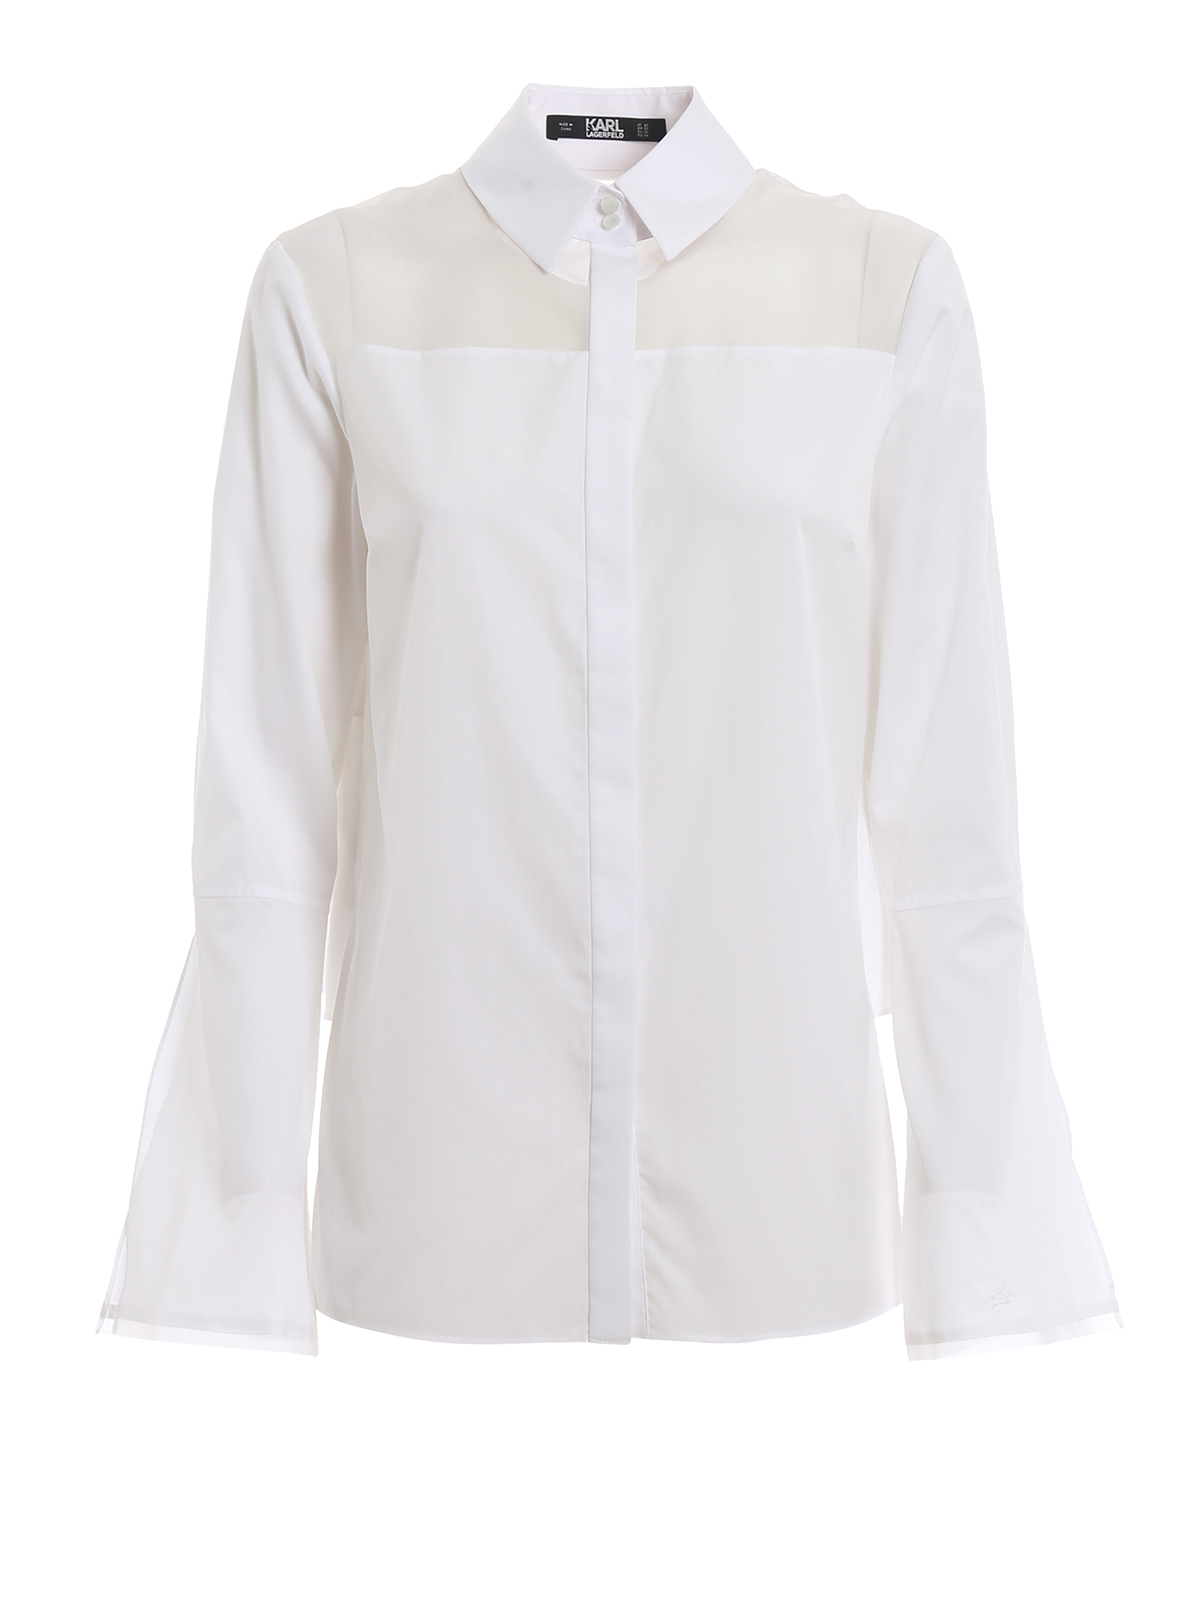 Karl Lagerfeld Sheer Panel White Cotton Shirt